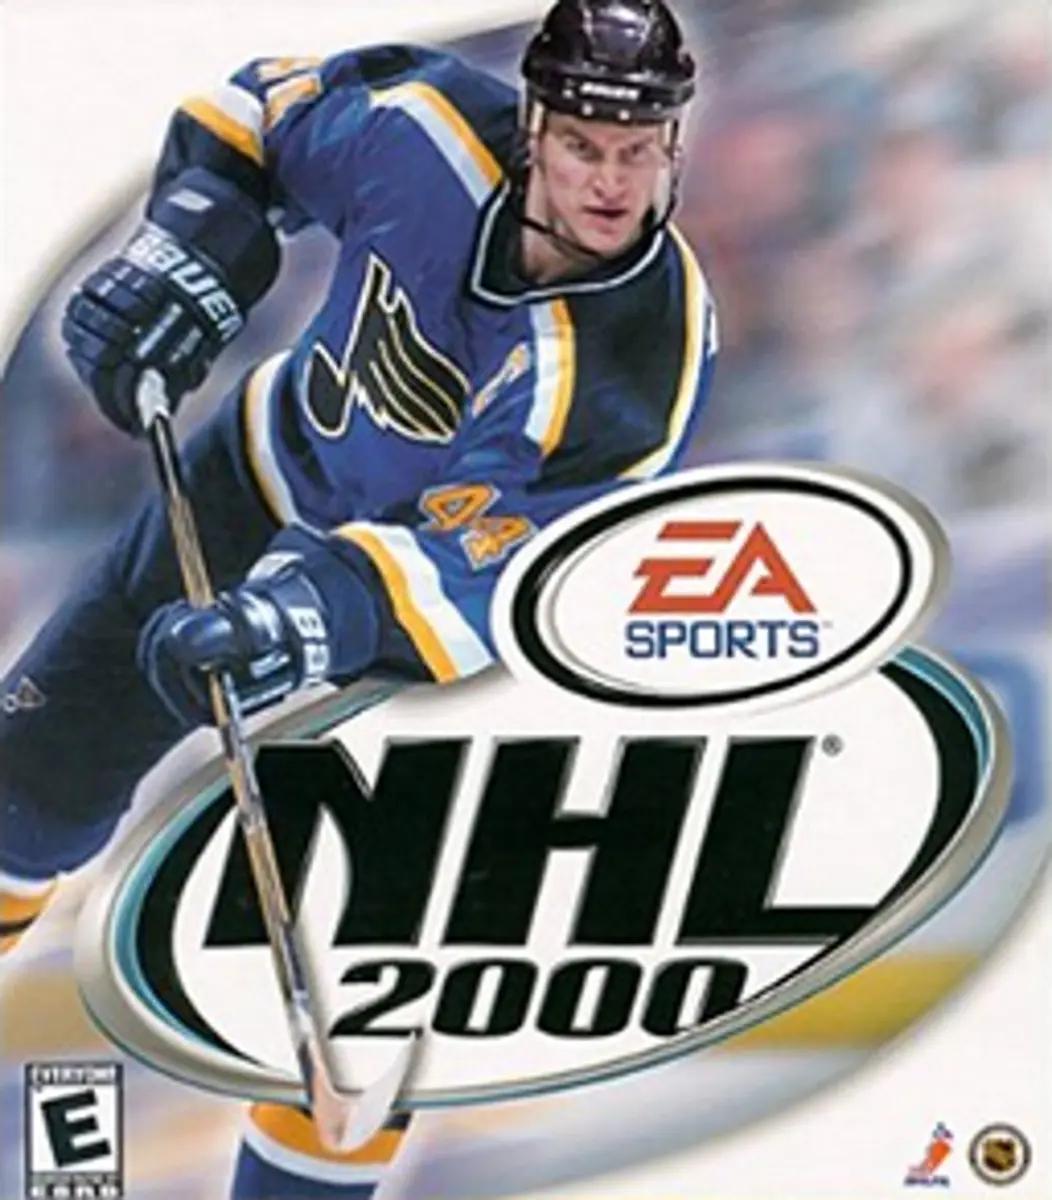 Chris Pronger on the NHL 2000 cover.